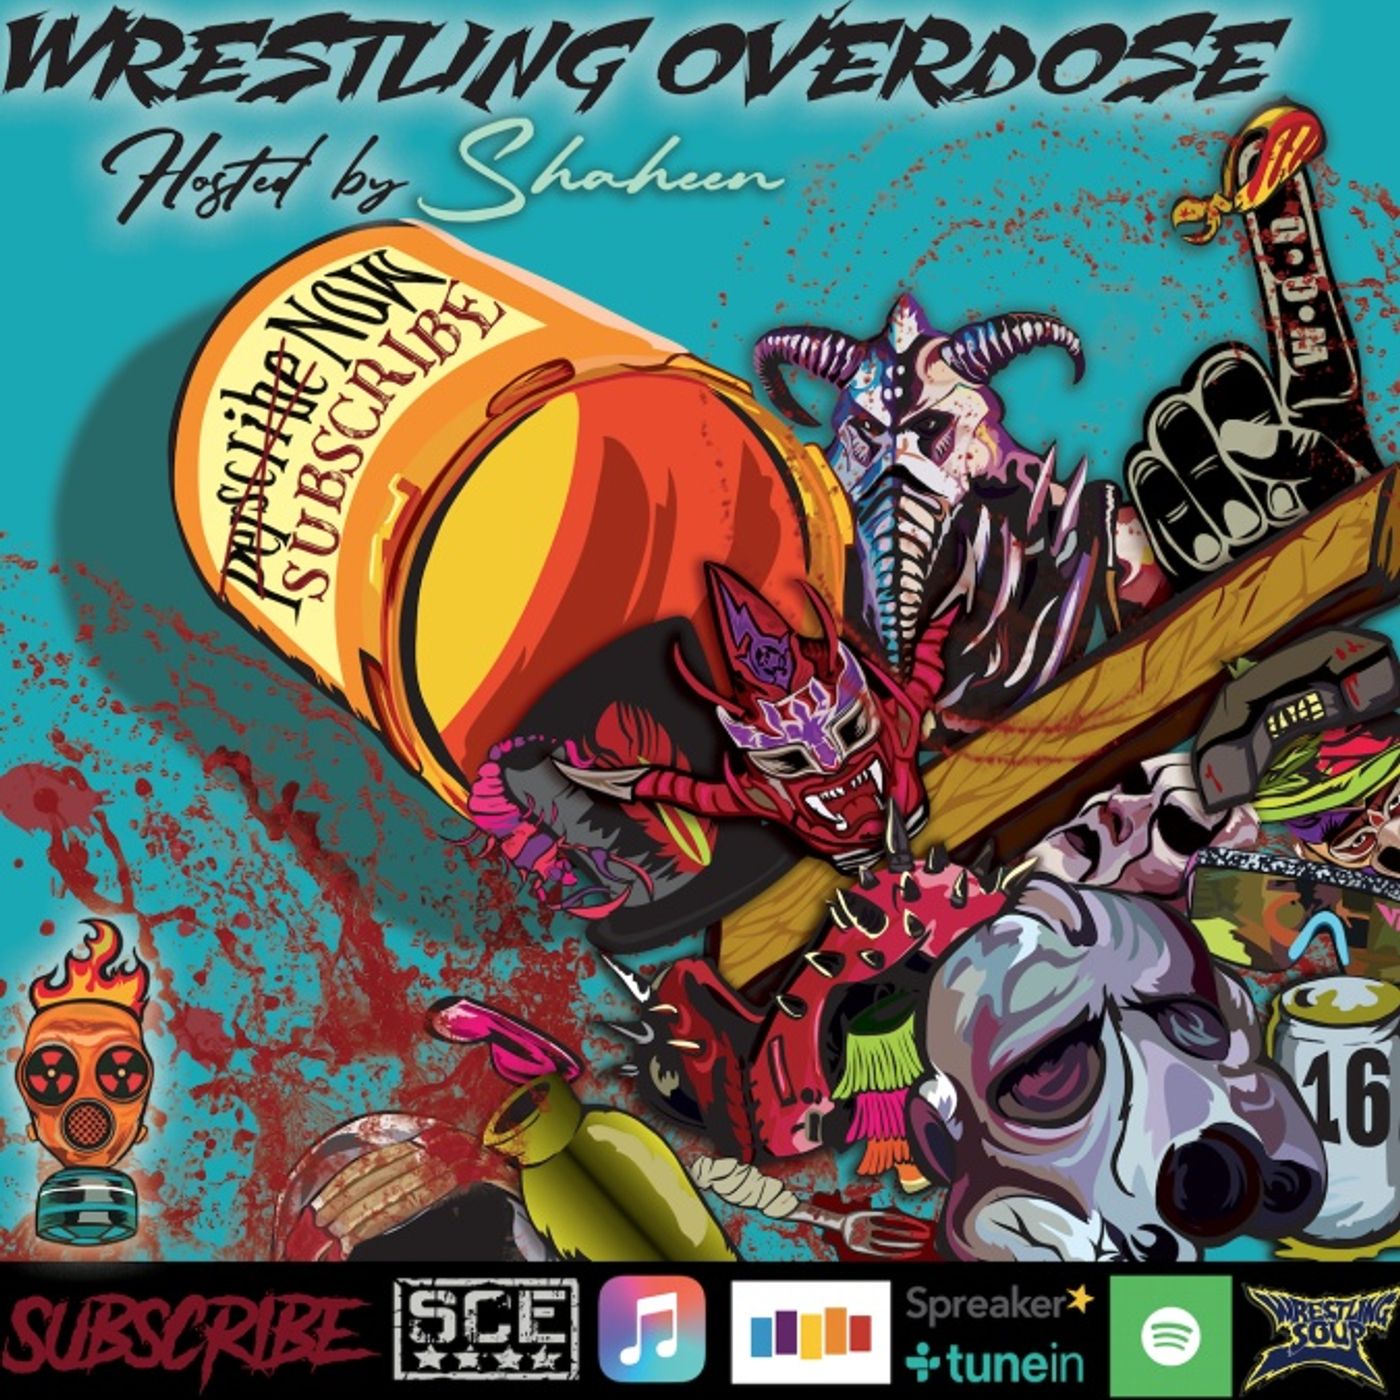 Wrestling Overdose